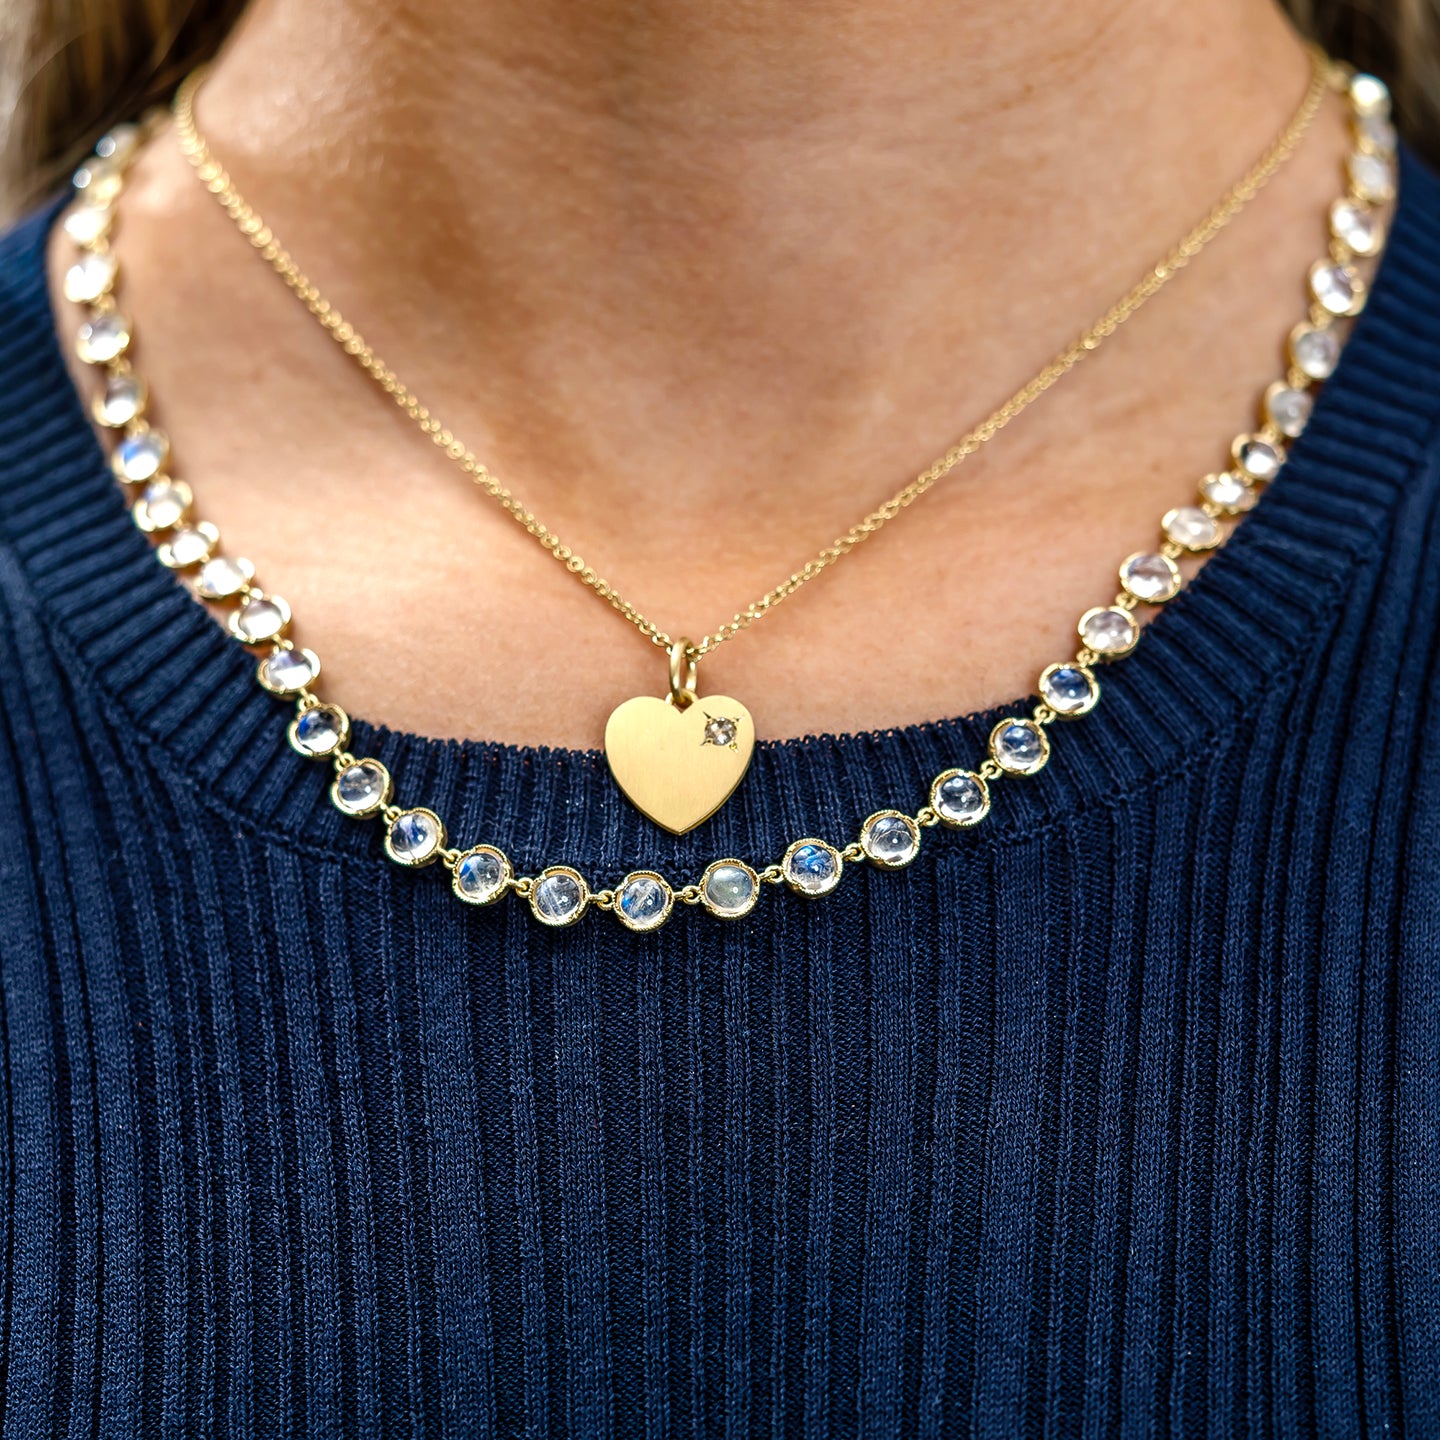 Irene Neuwirth Gold Love 15mm Heart Pendant with Diamond